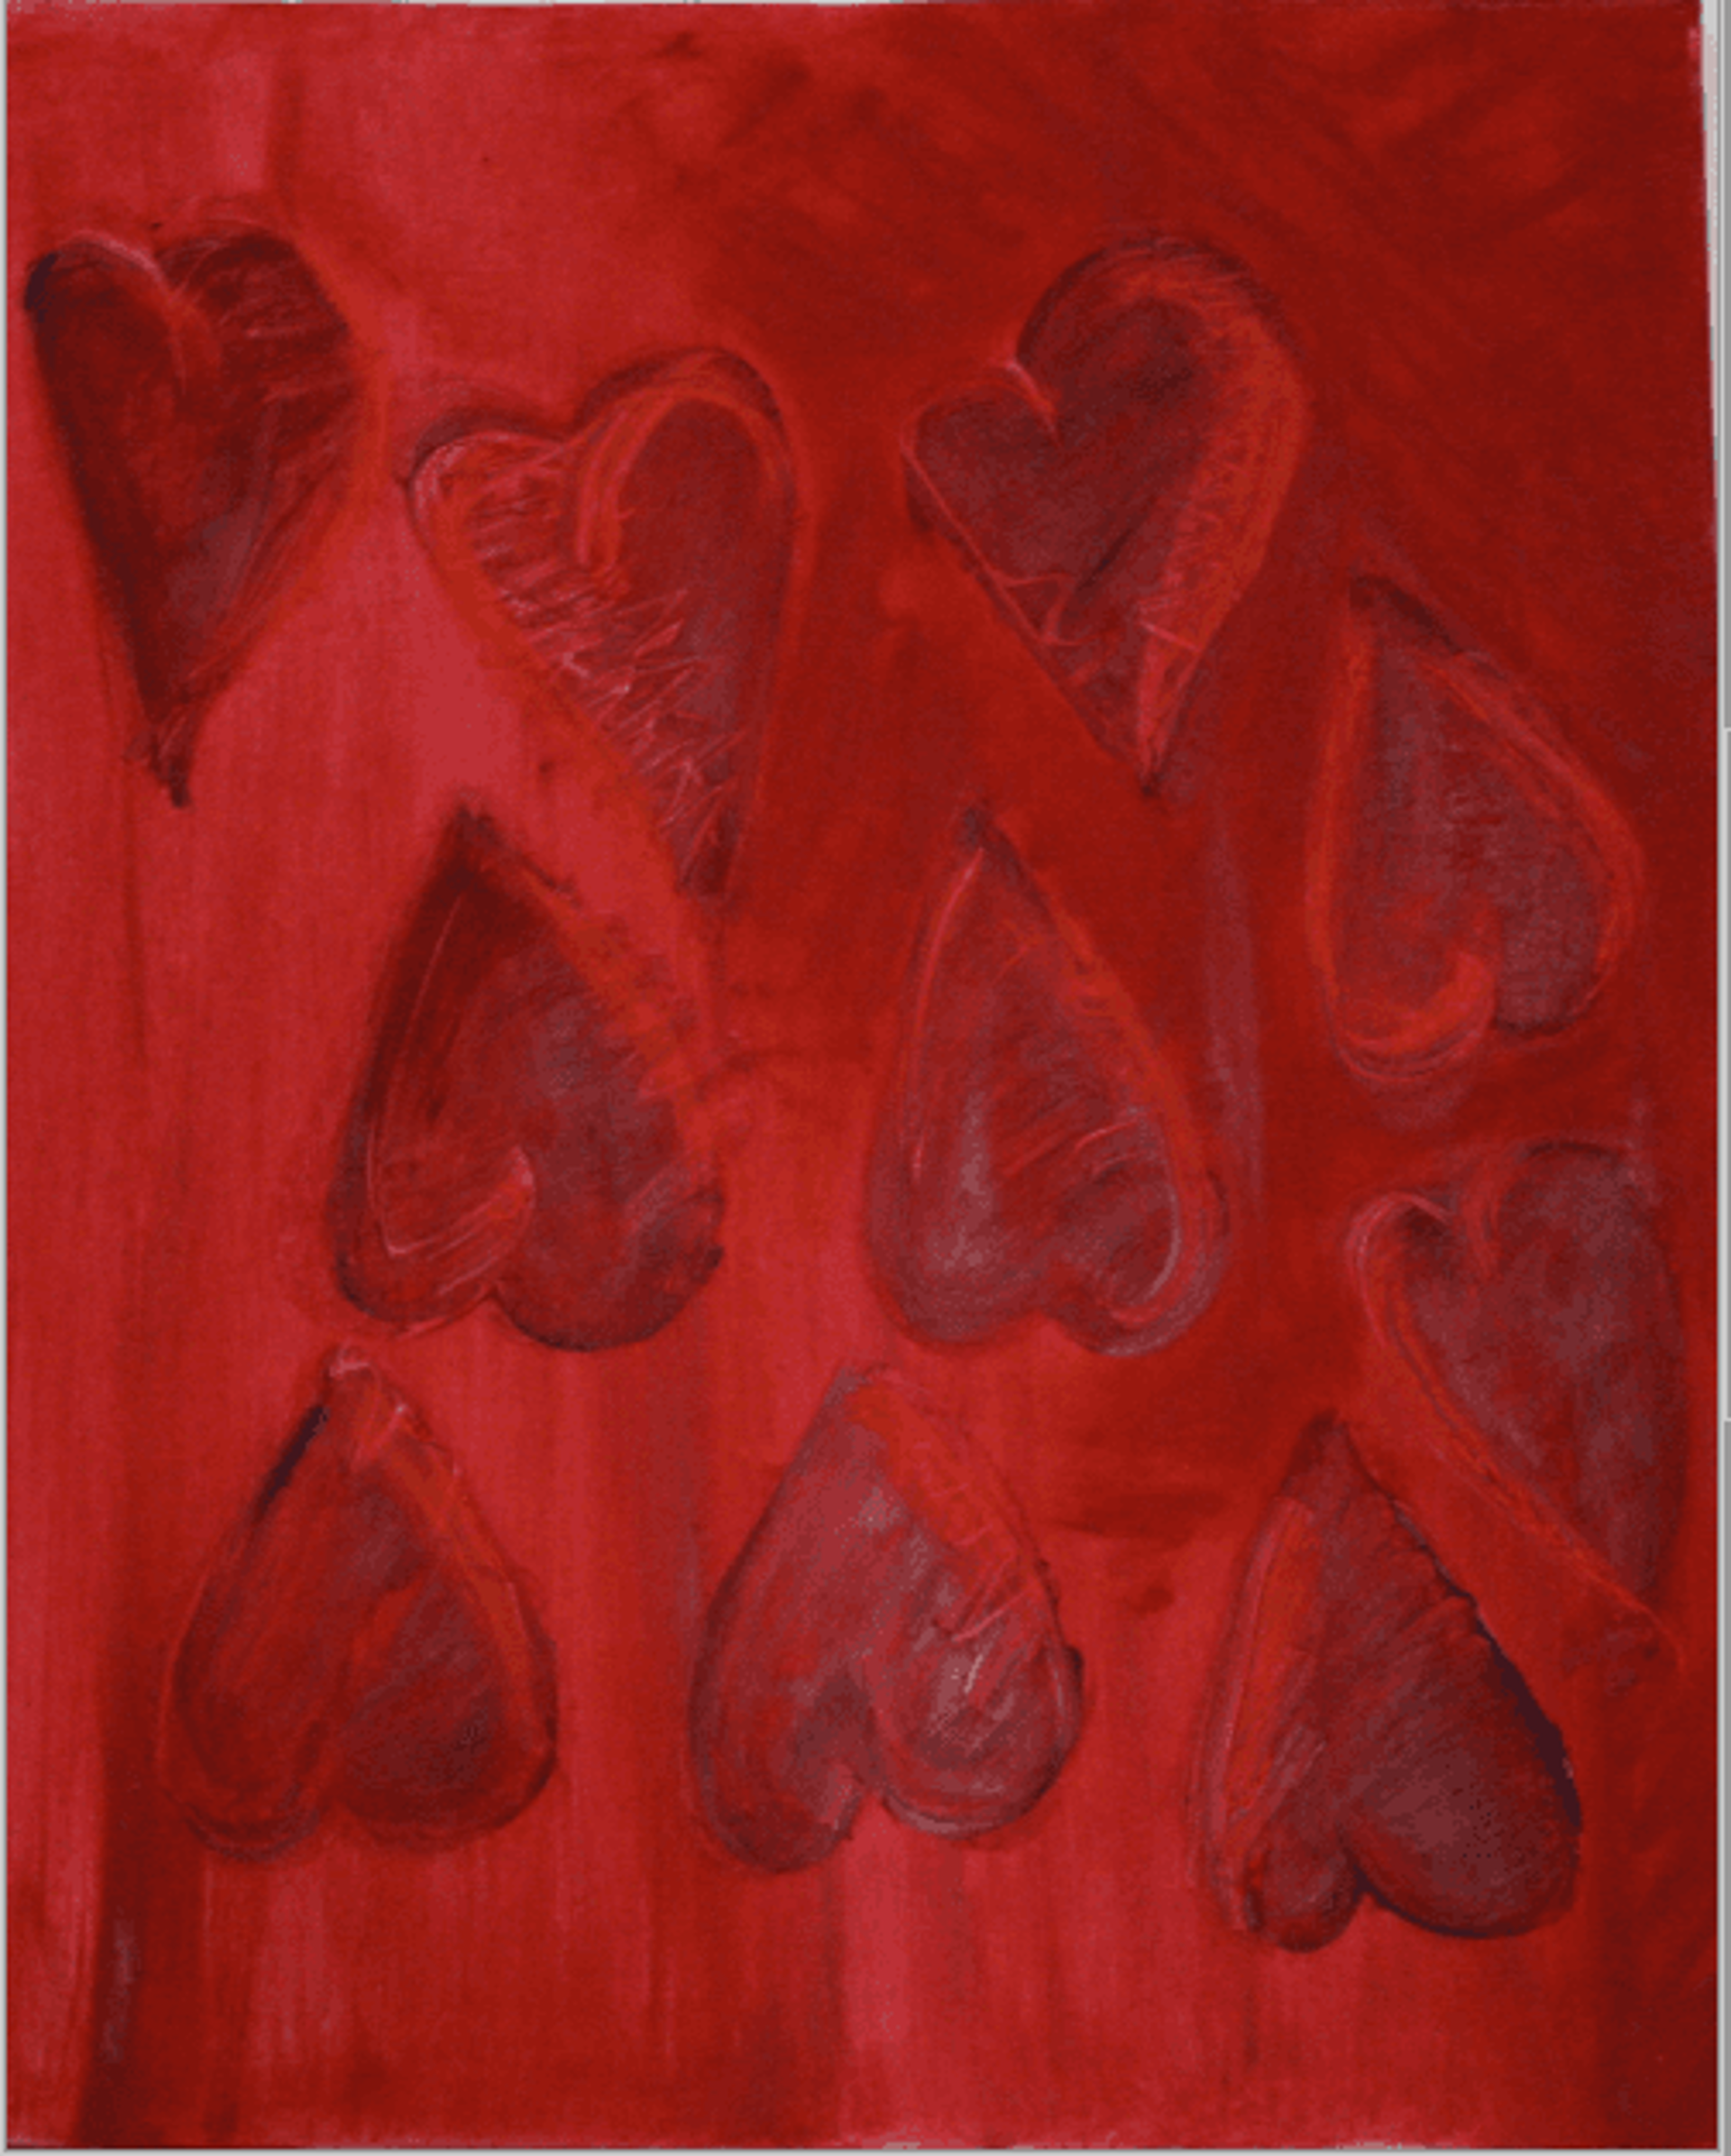 10 of Hearts by Stuart Rapeport